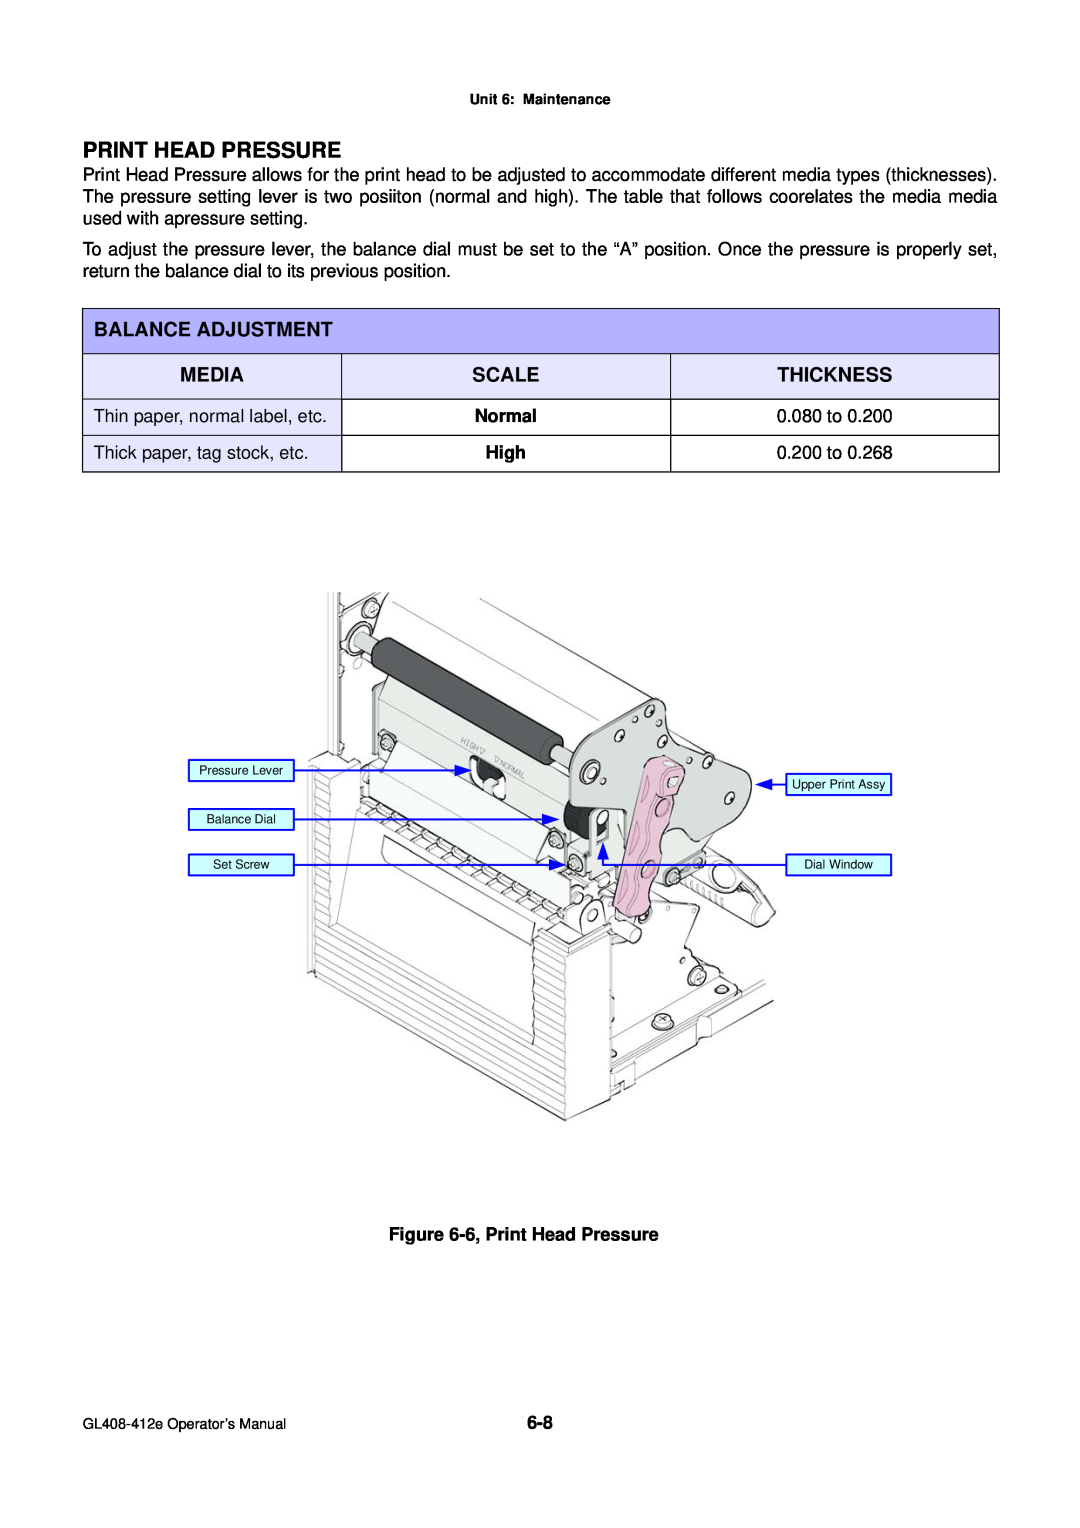 SATO GL4XXE manual Print Head Pressure, Scale, Thickness, Balance Adjustment, Media 